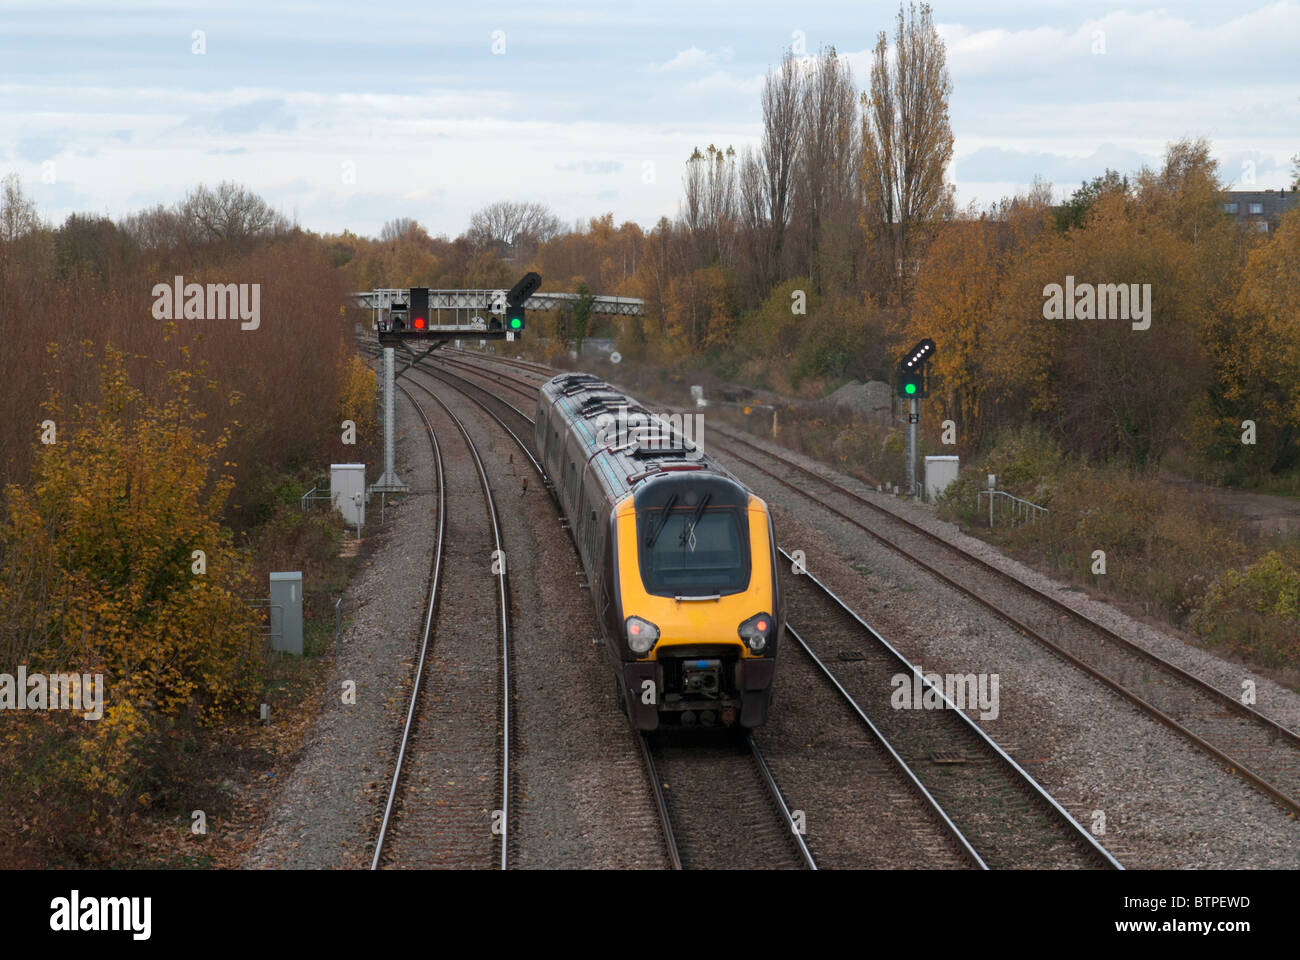 UK Train on Tracks Traveling Through Green Signal Stock Photo